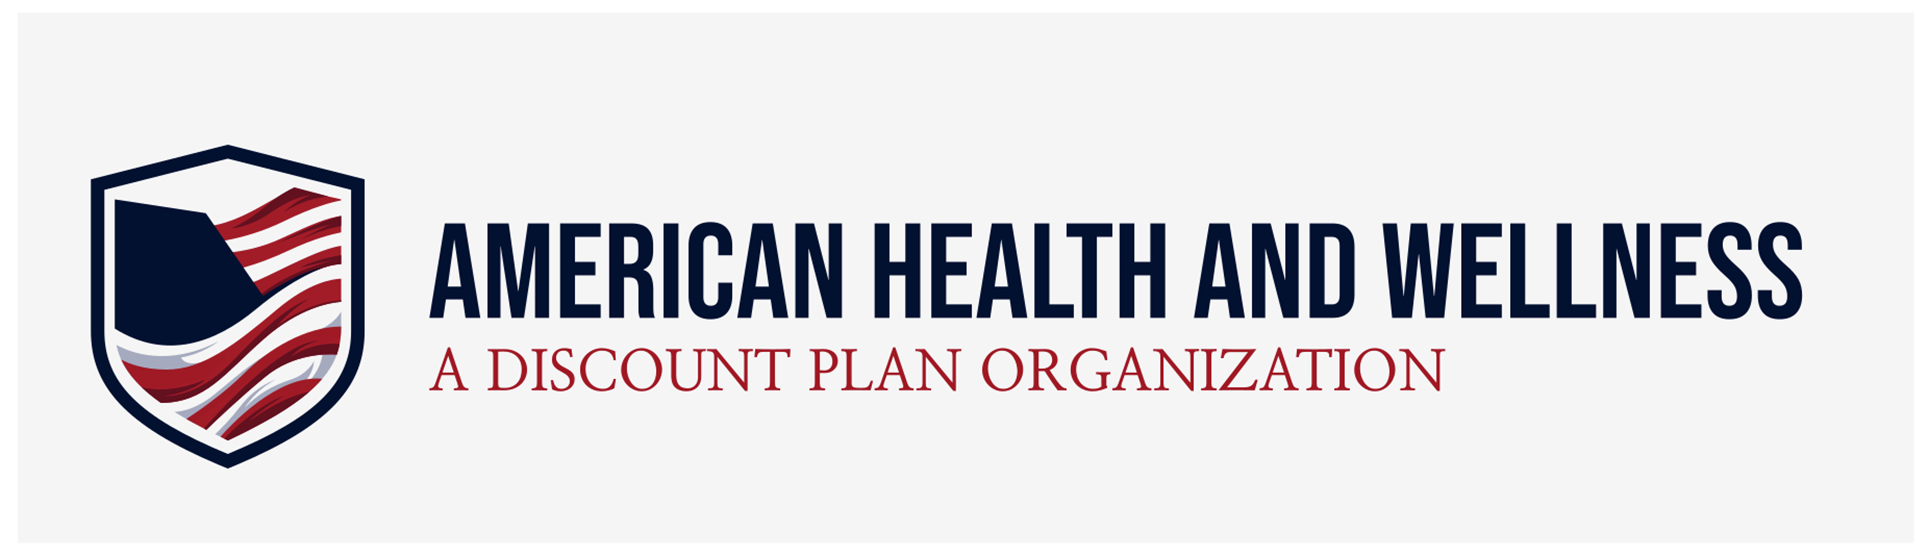 American Health and Wellness Plan